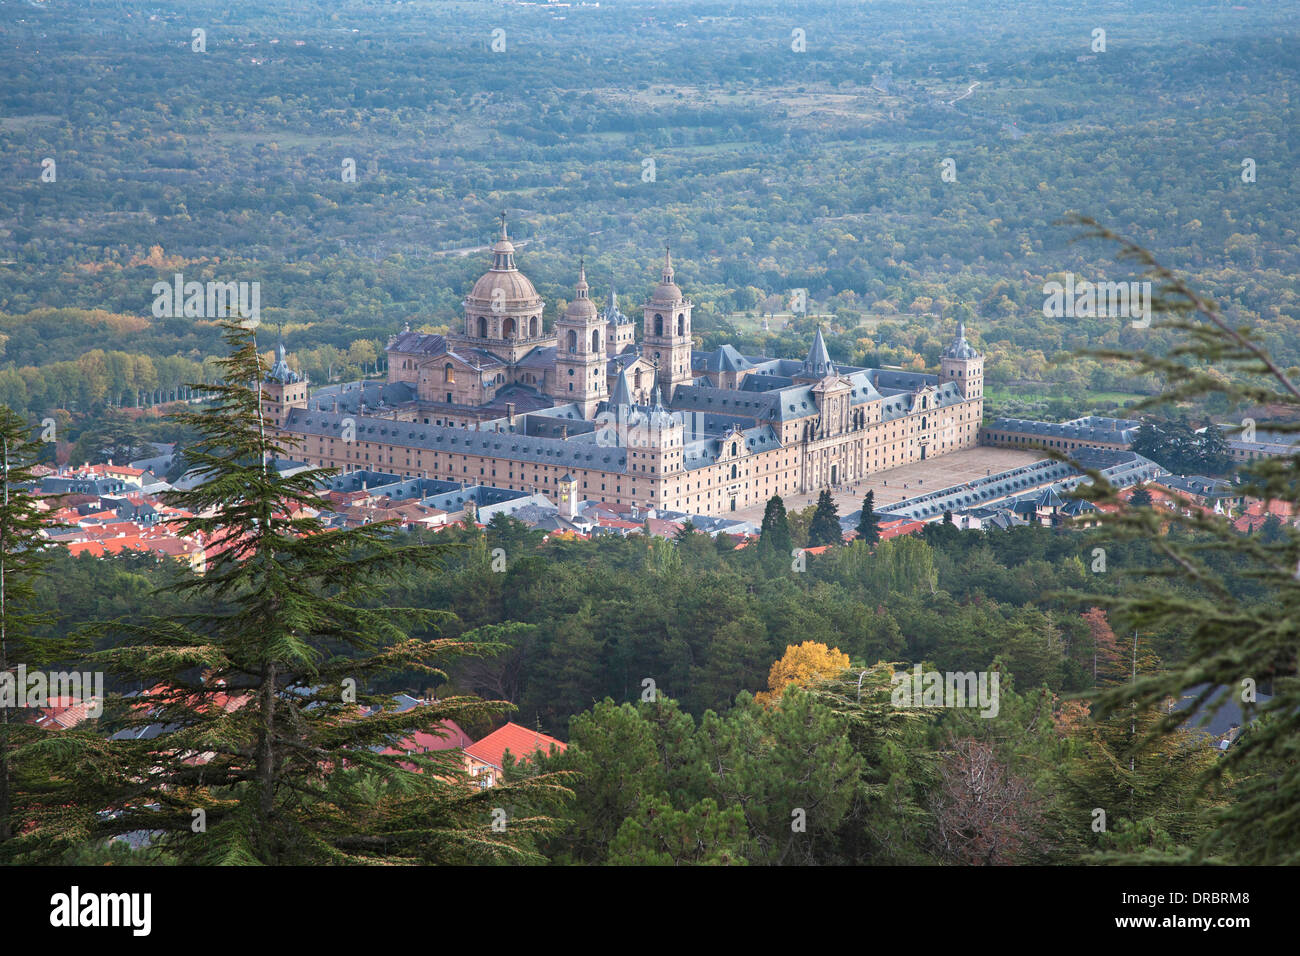 A distant view of the Royal Monastery of San Lorenzo de El Escorial. Stock Photo